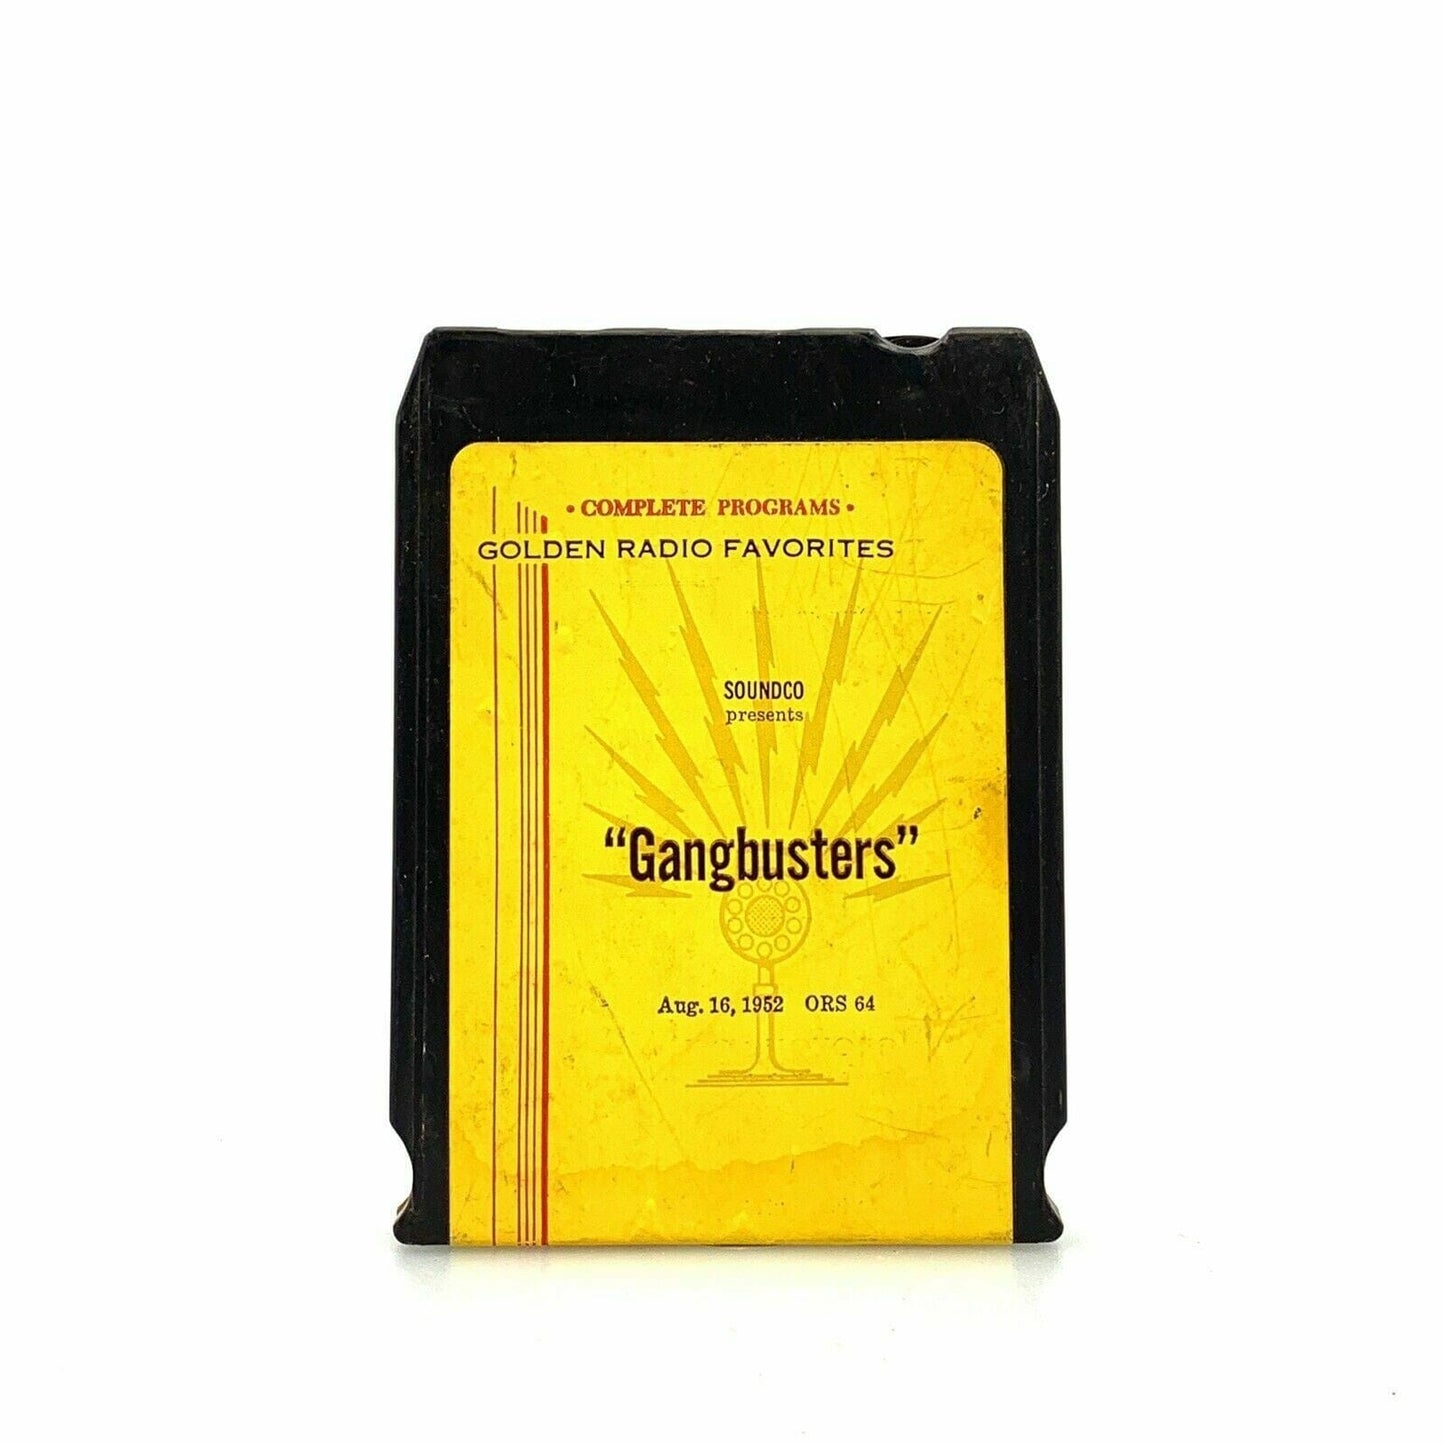 Vintage 8 Track Cartridge “Gangbusters” Soundco Presents Golden Radio Favorites